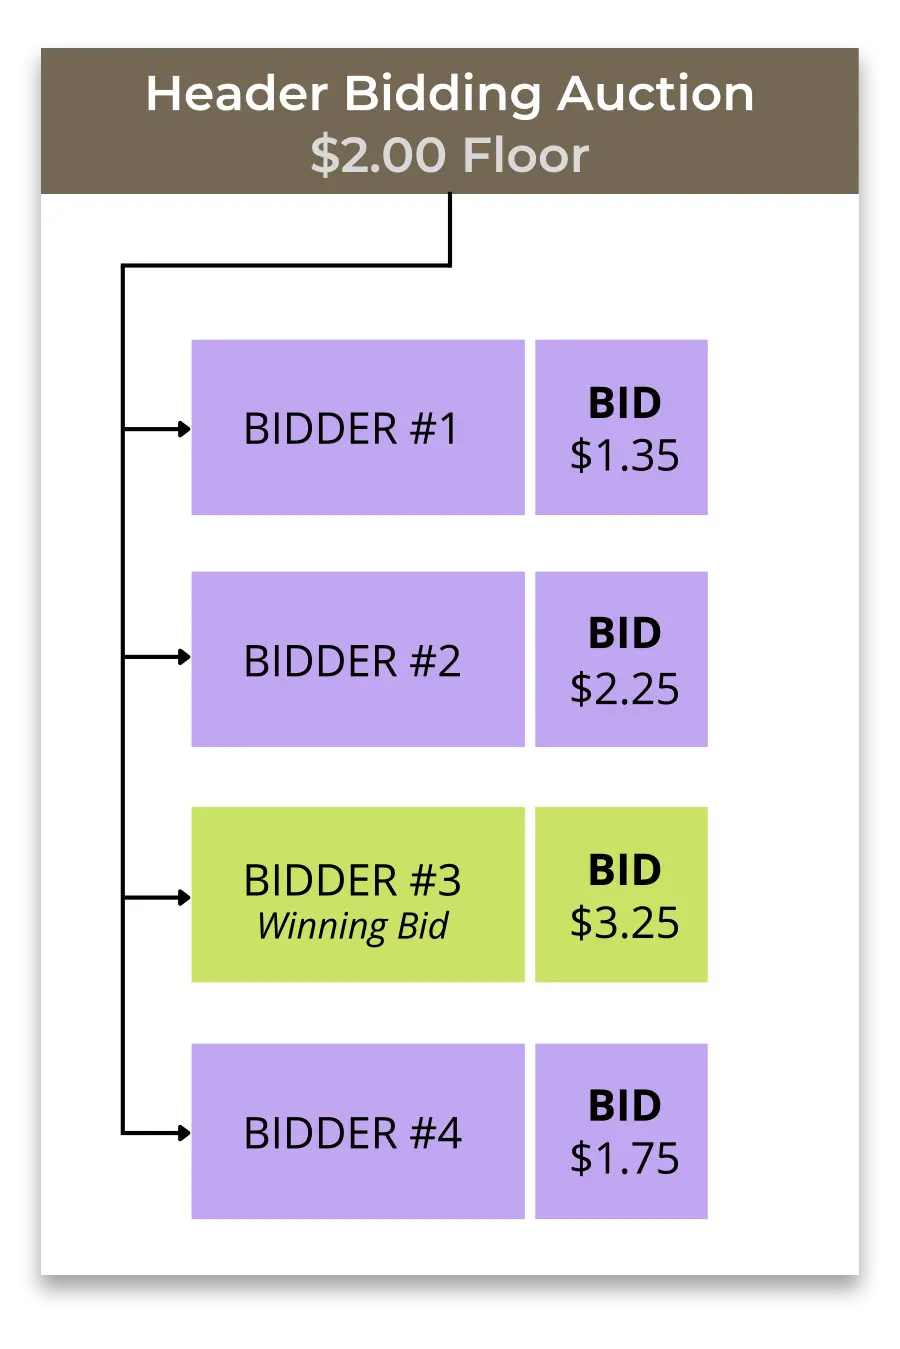 Header bidding auction - How auctioning happens in a header bidding setup